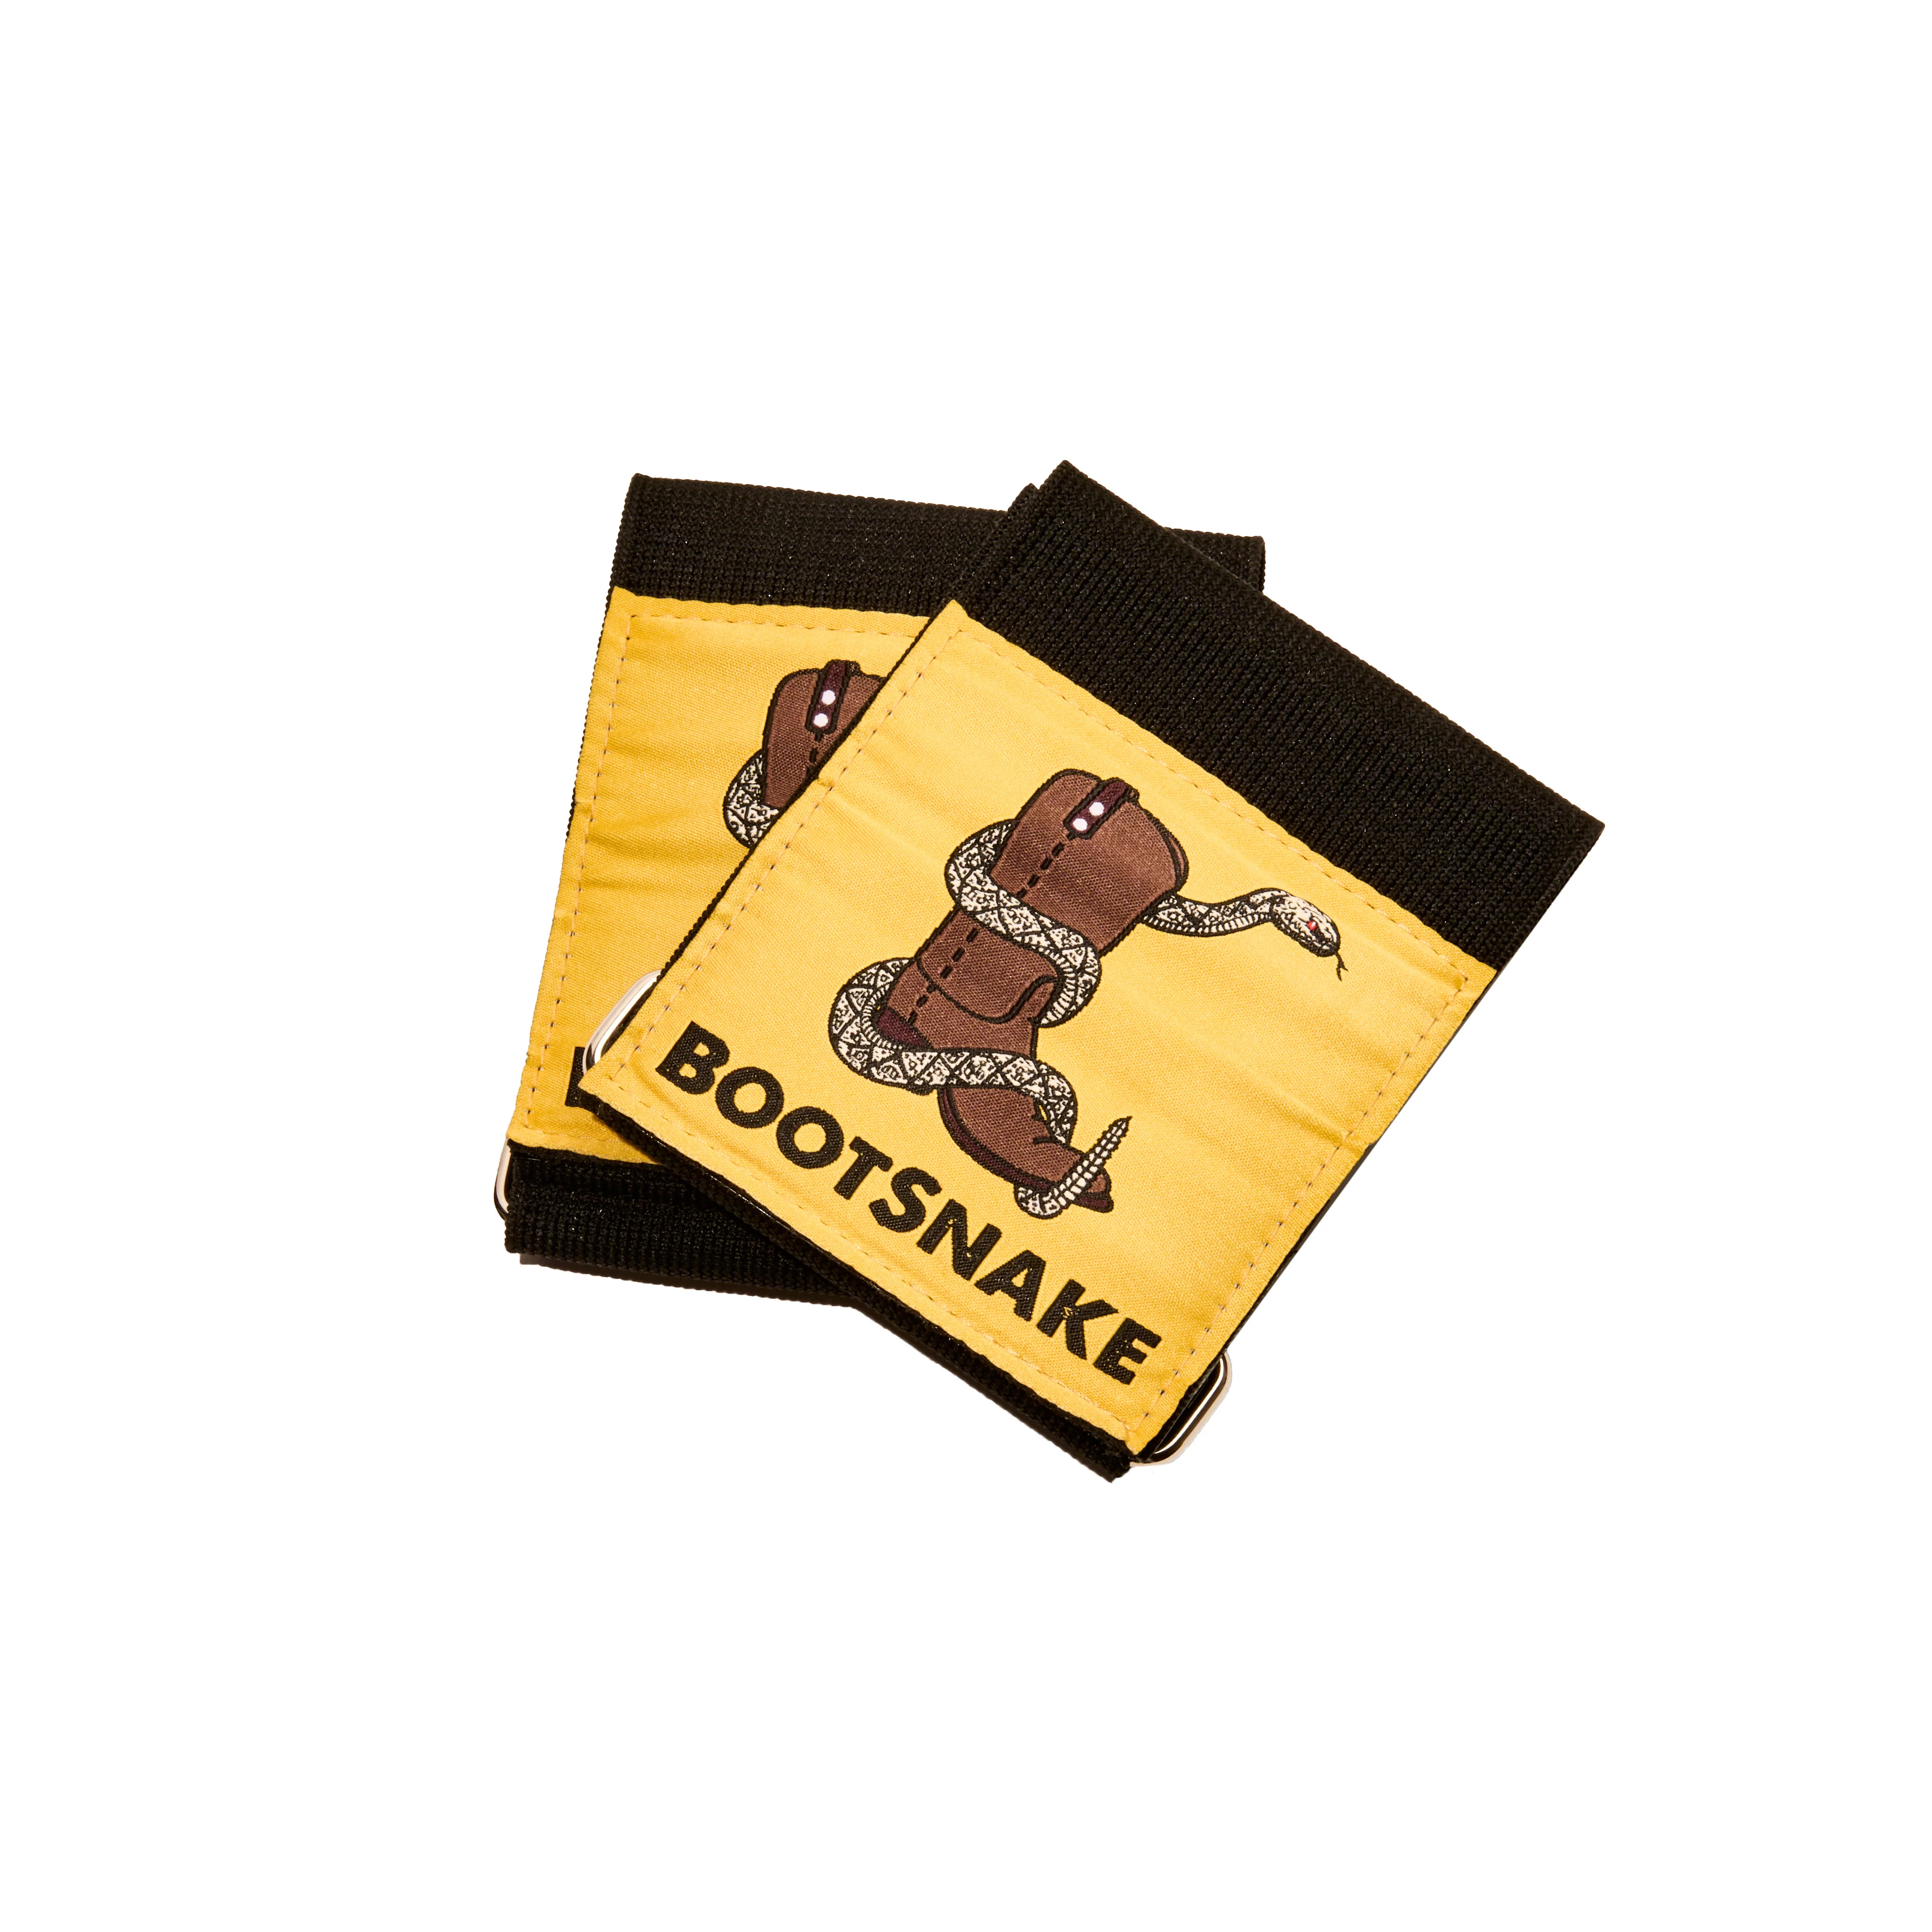 Bootsnake Bootstraps | Bootsnakes